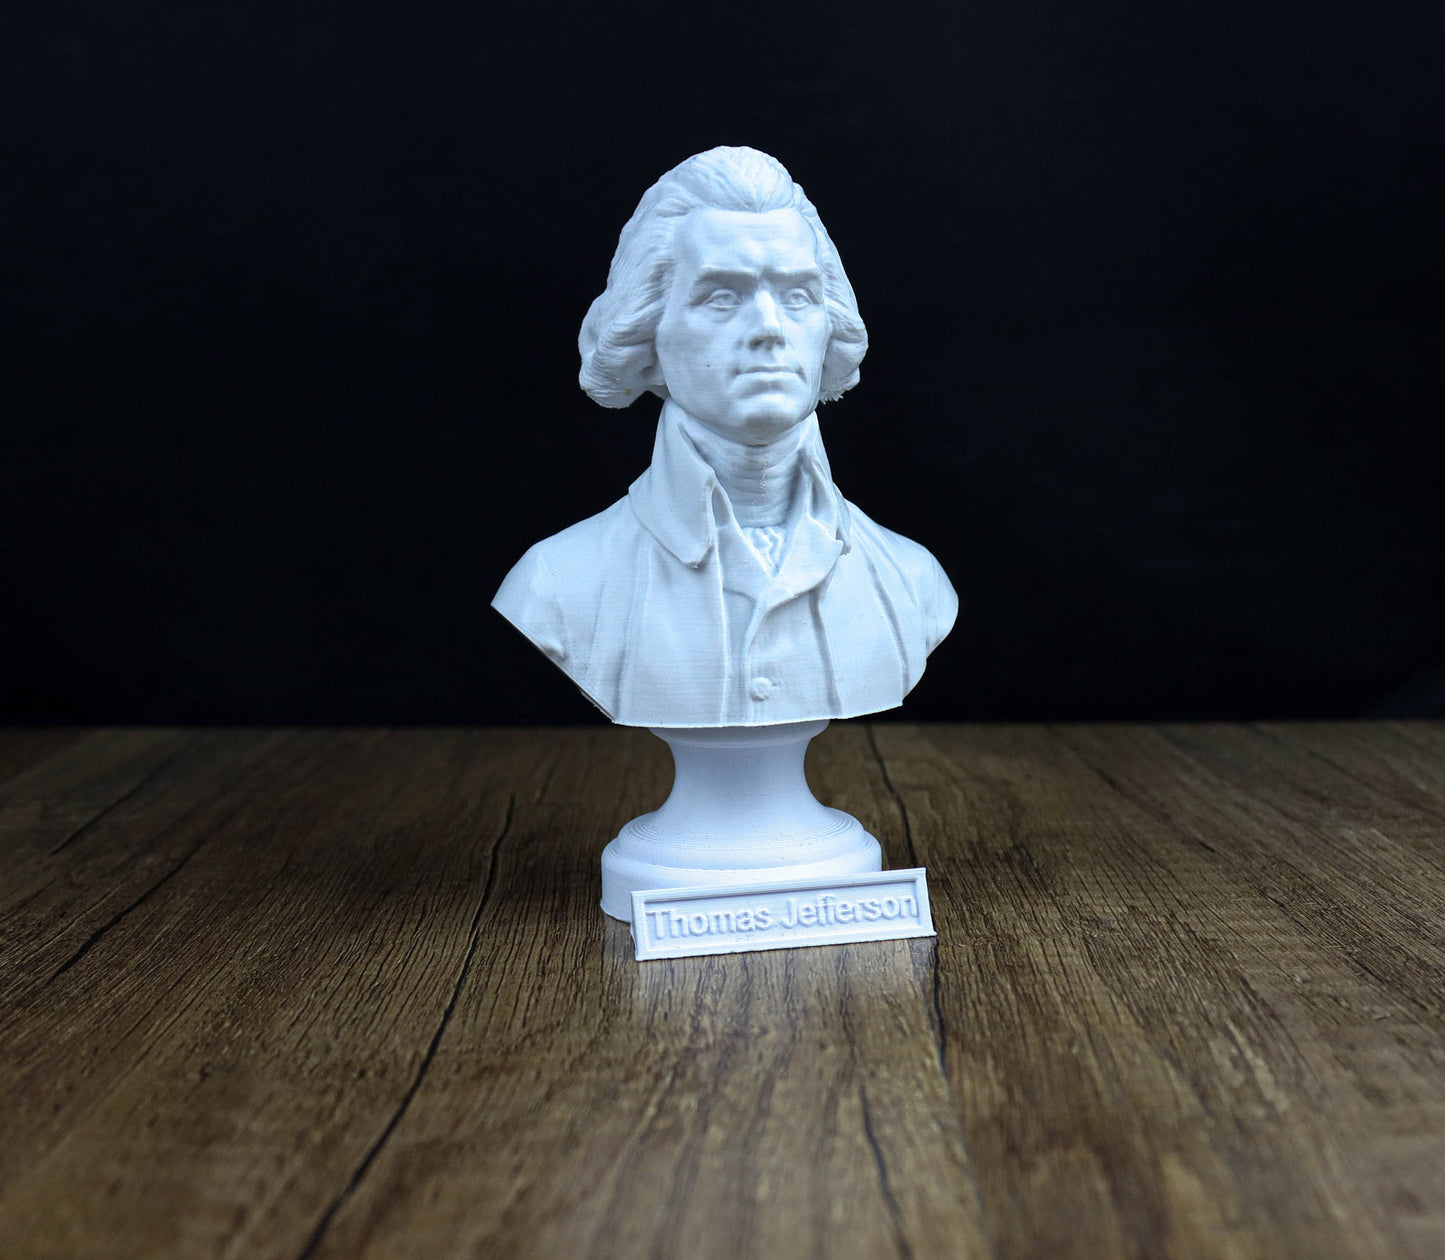 Founding Fathers Busts Value Pack Collection: George Washington, Benjamin Franklin, Thomas Jefferson, Alexander Hamilton, John Adams etc